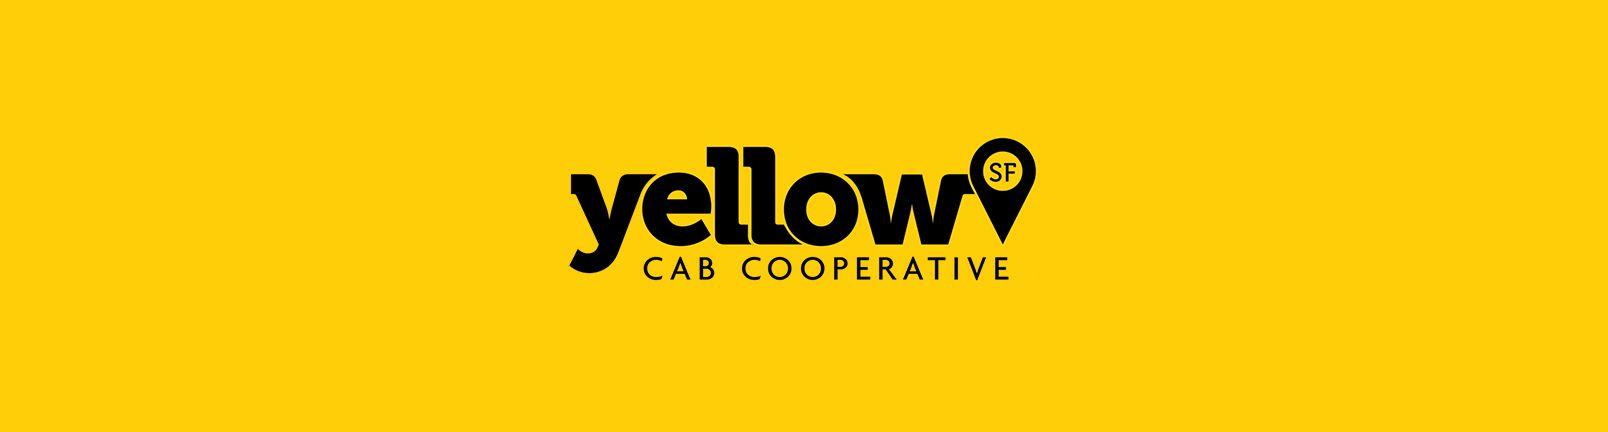 Yellow Company Logo - Yellow Cab, Co